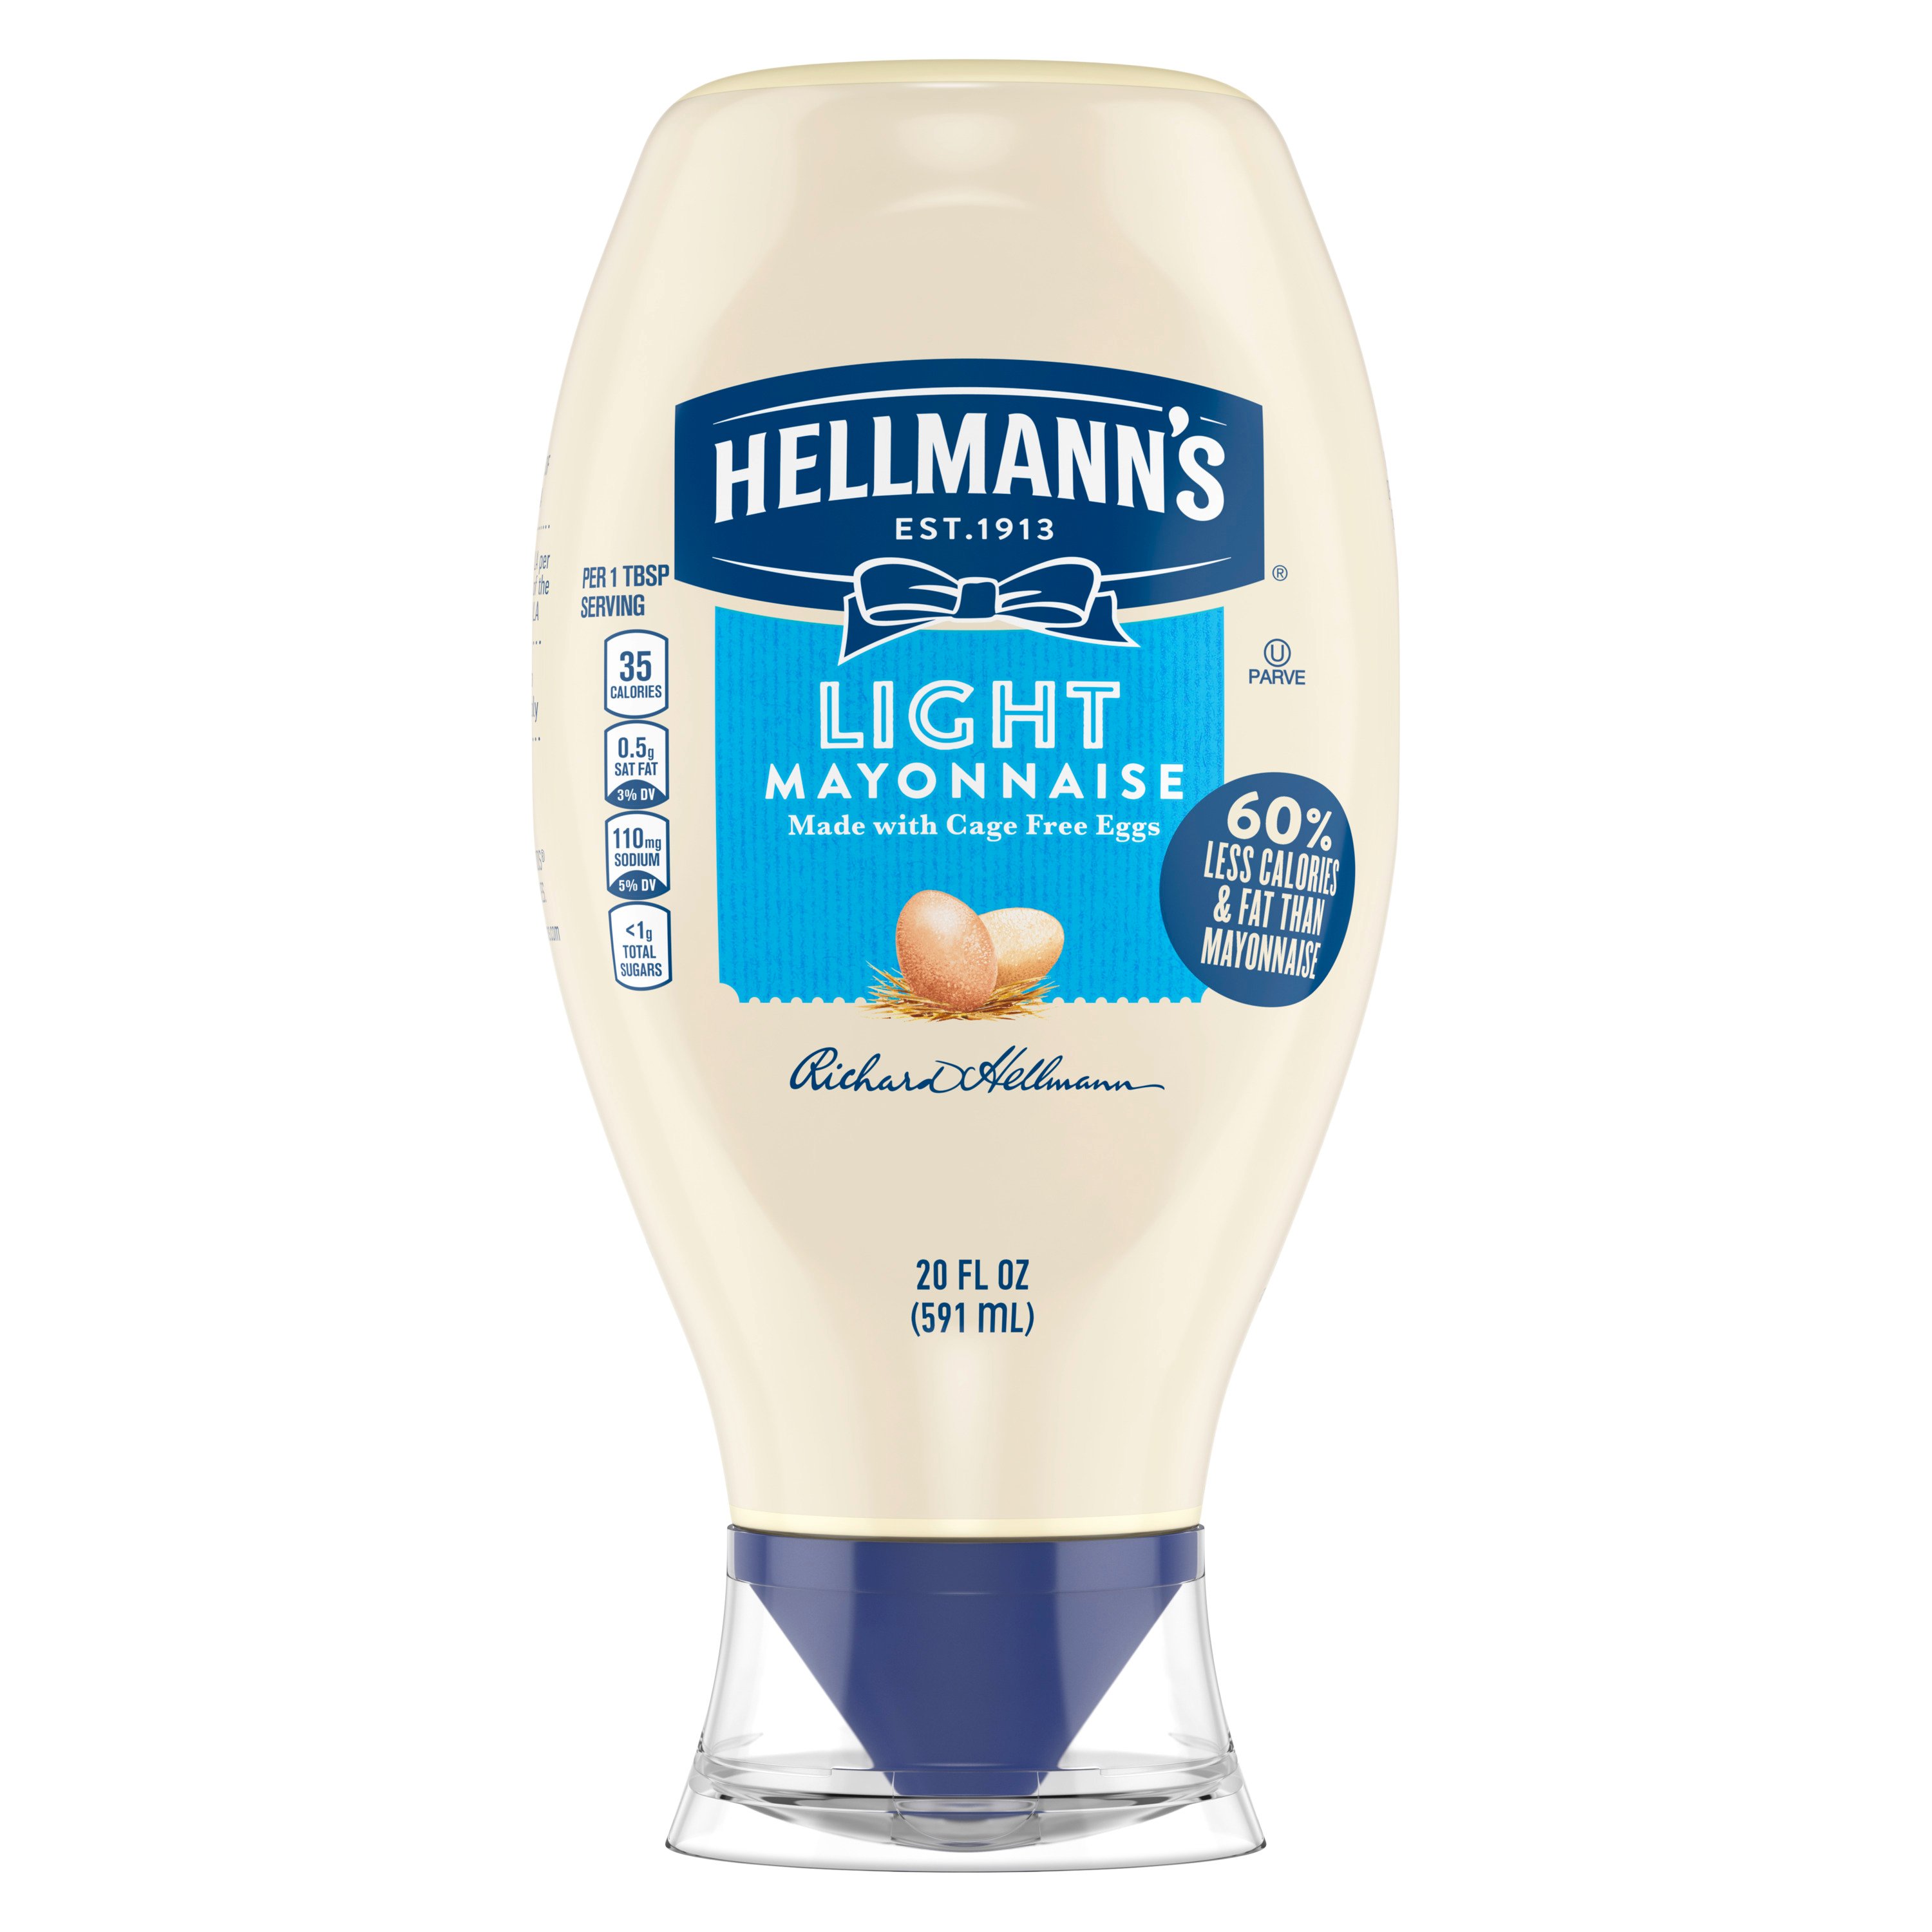 Hellmann's Squeeze Light Mayonnaise - Mayonnaise & Spreads at H-E-B